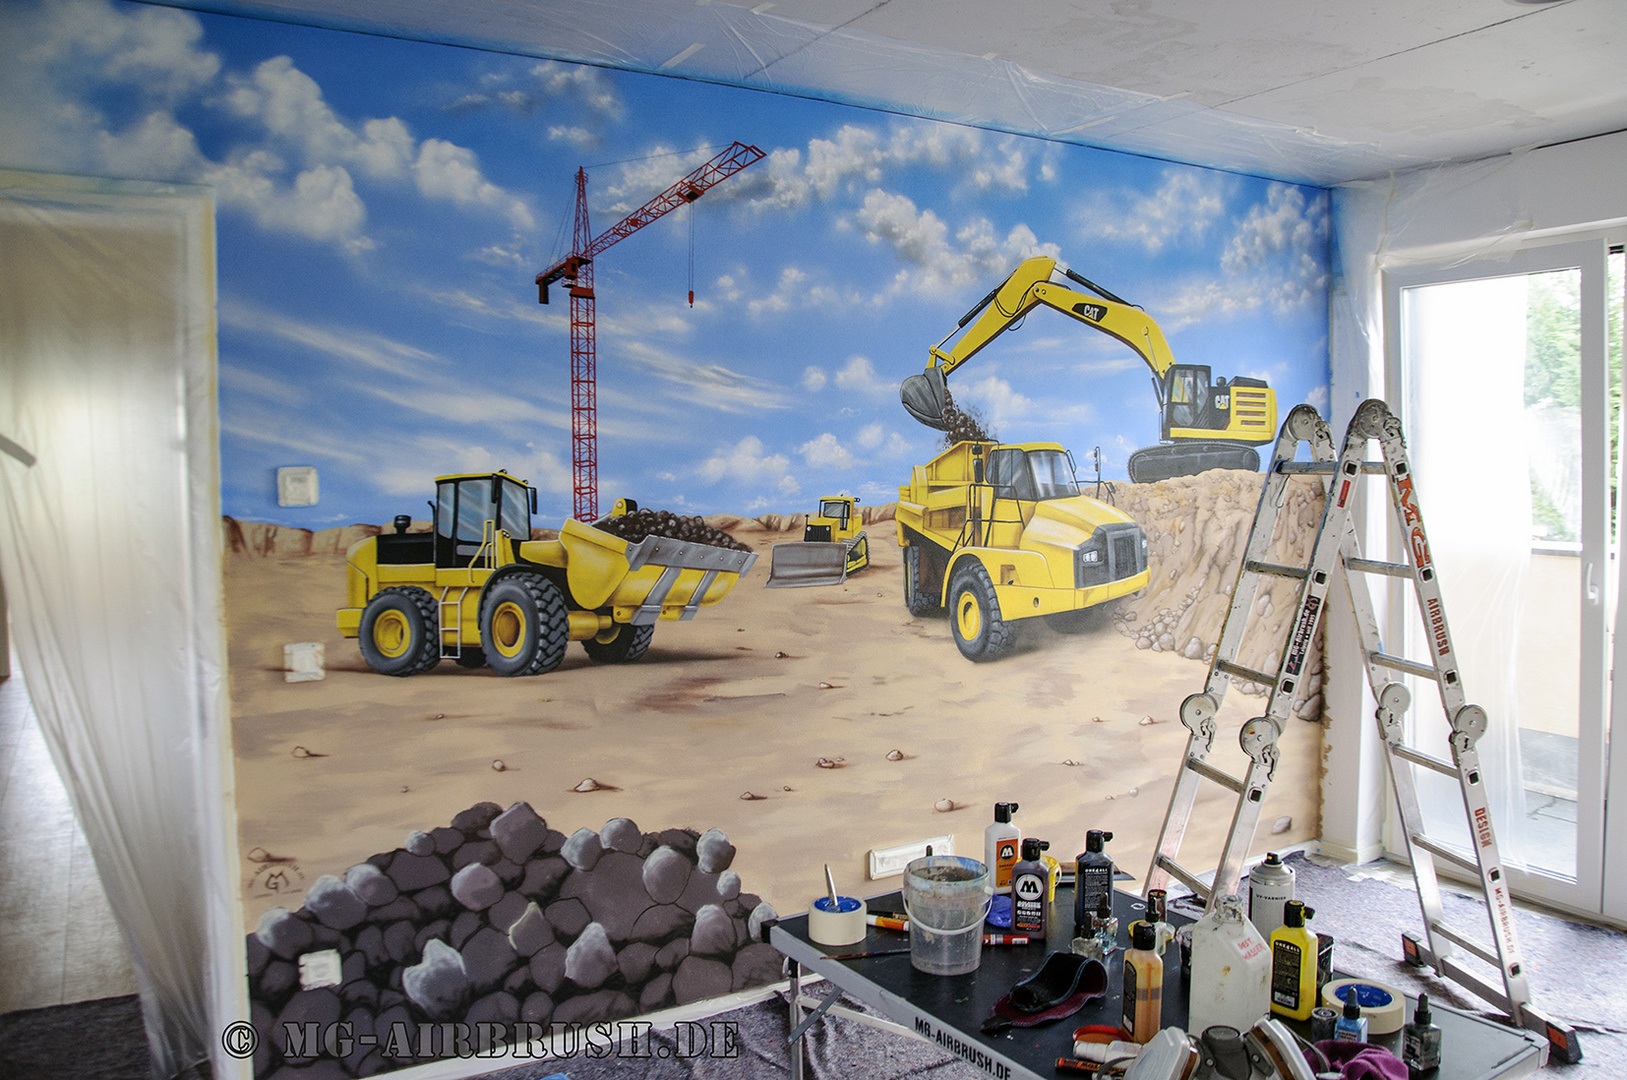 Wandbild "Baustelle" in Arbeit